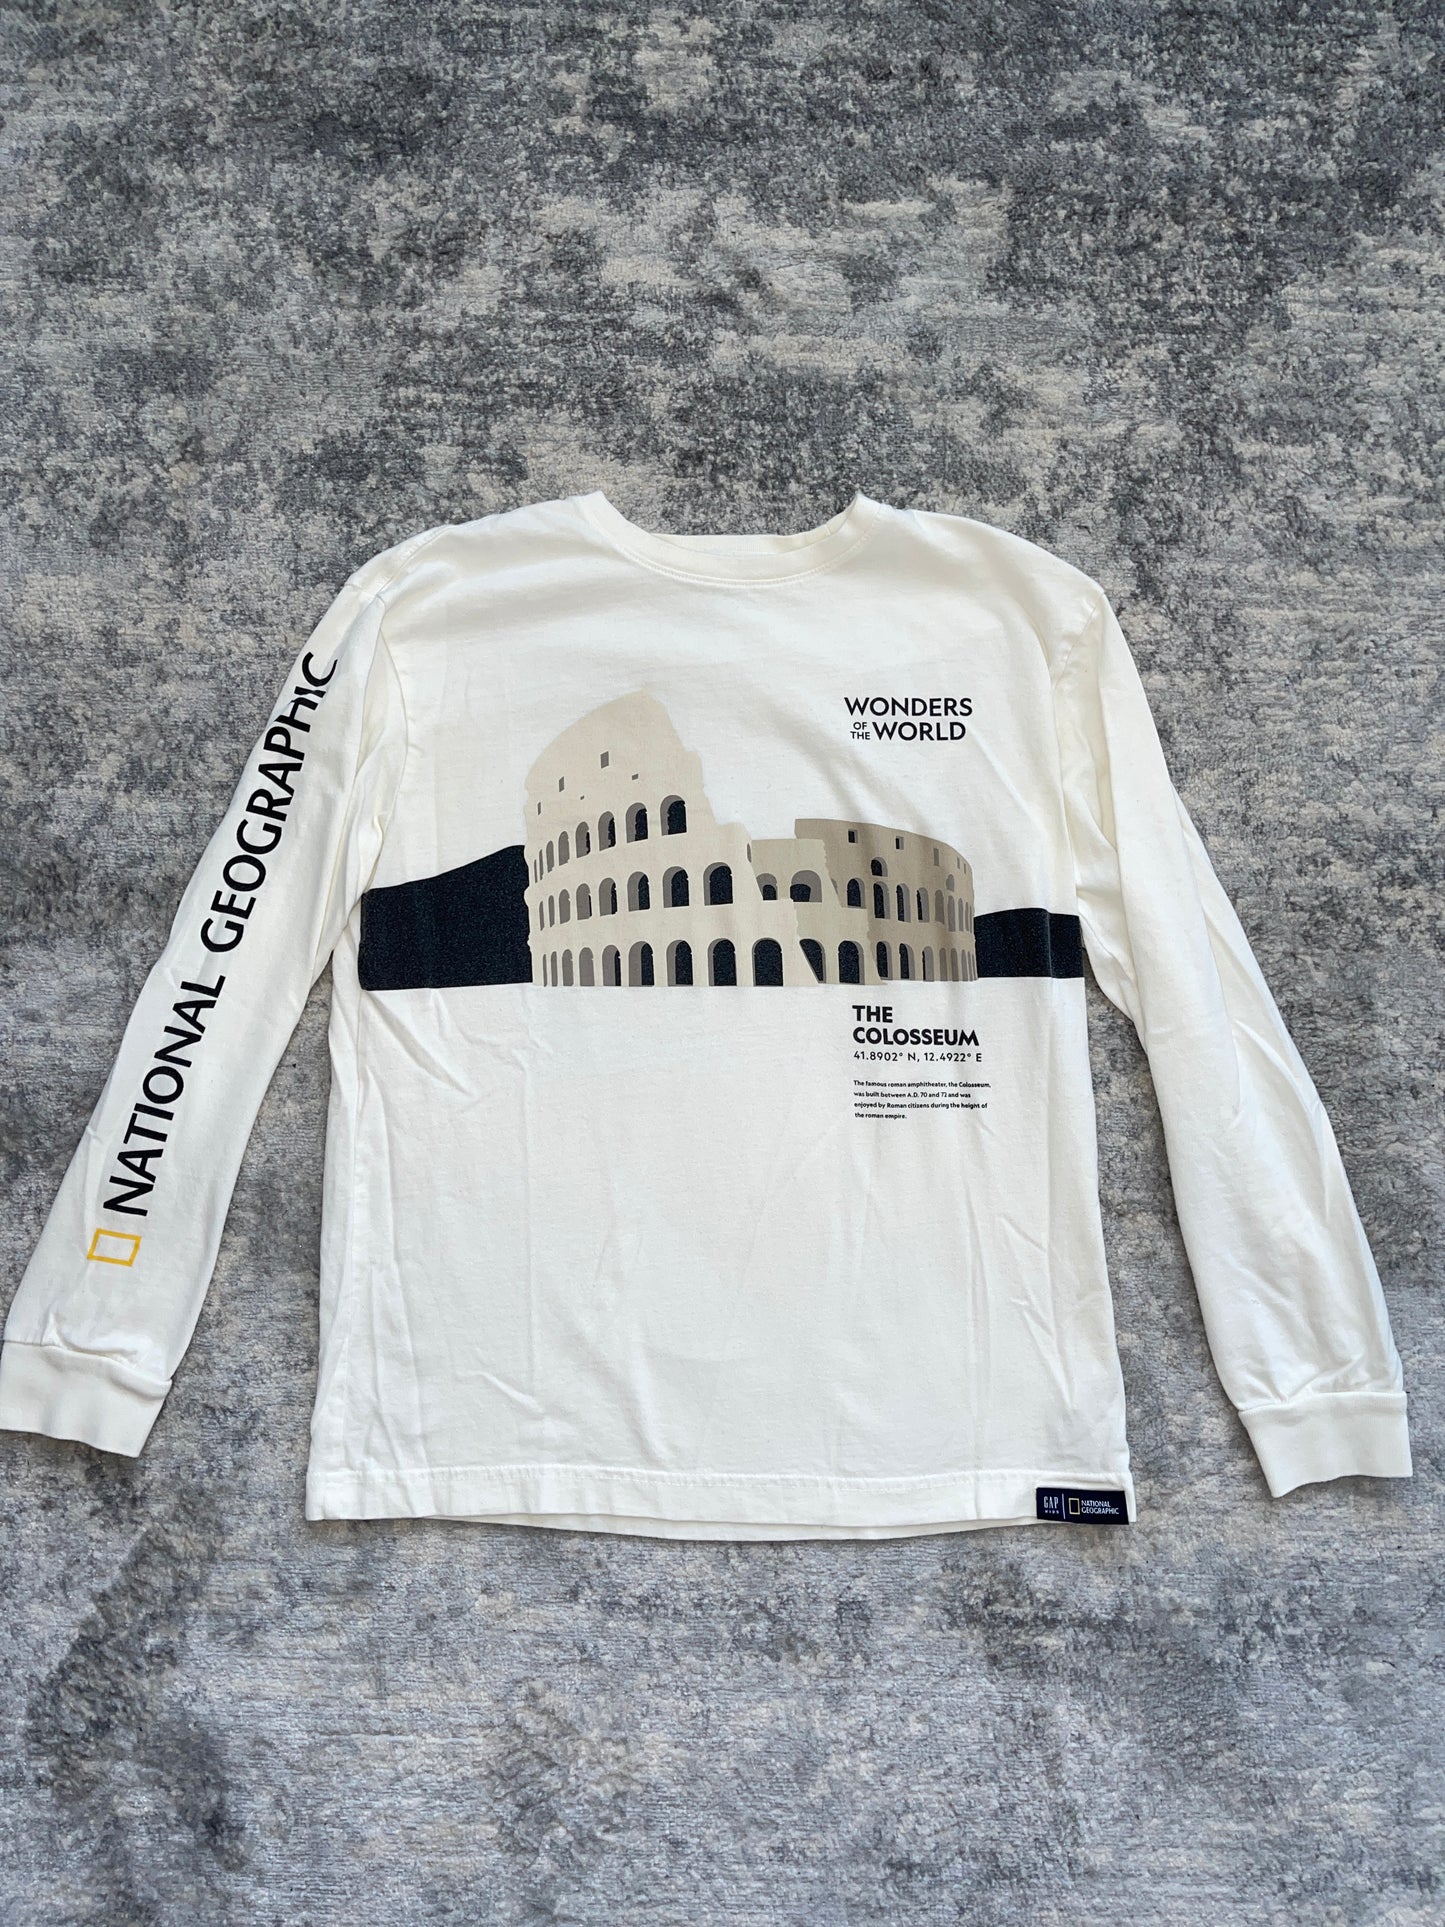 Gap Nat Geo Colosseum Boys Graphic Long-Sleeved TShirt size XXL- PPU Montgomery